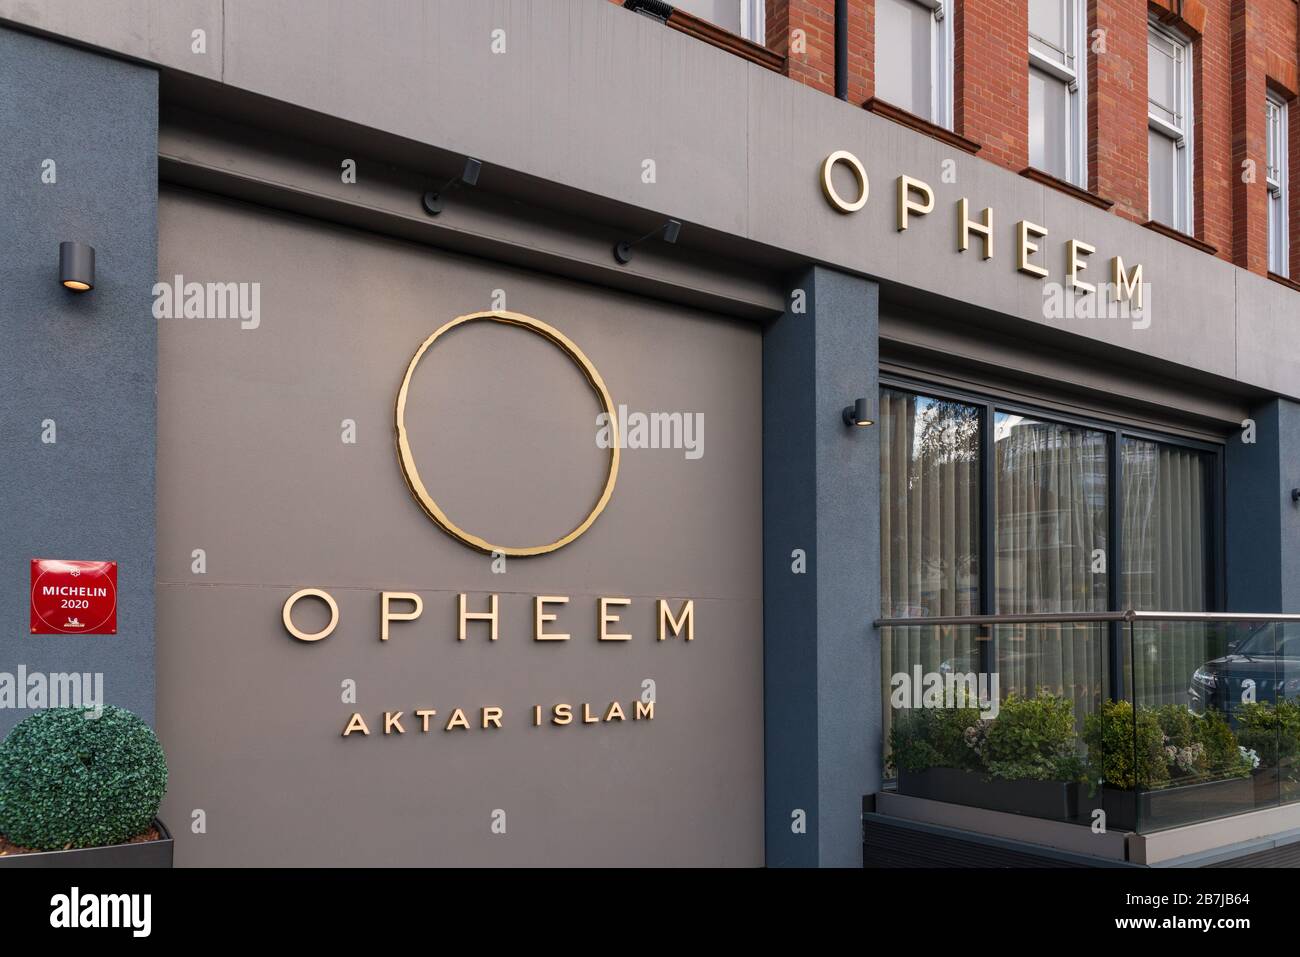 Opheem michelin starred high end indian restaurant run by Aktar Islam in Birmingham, UK Stock Photo